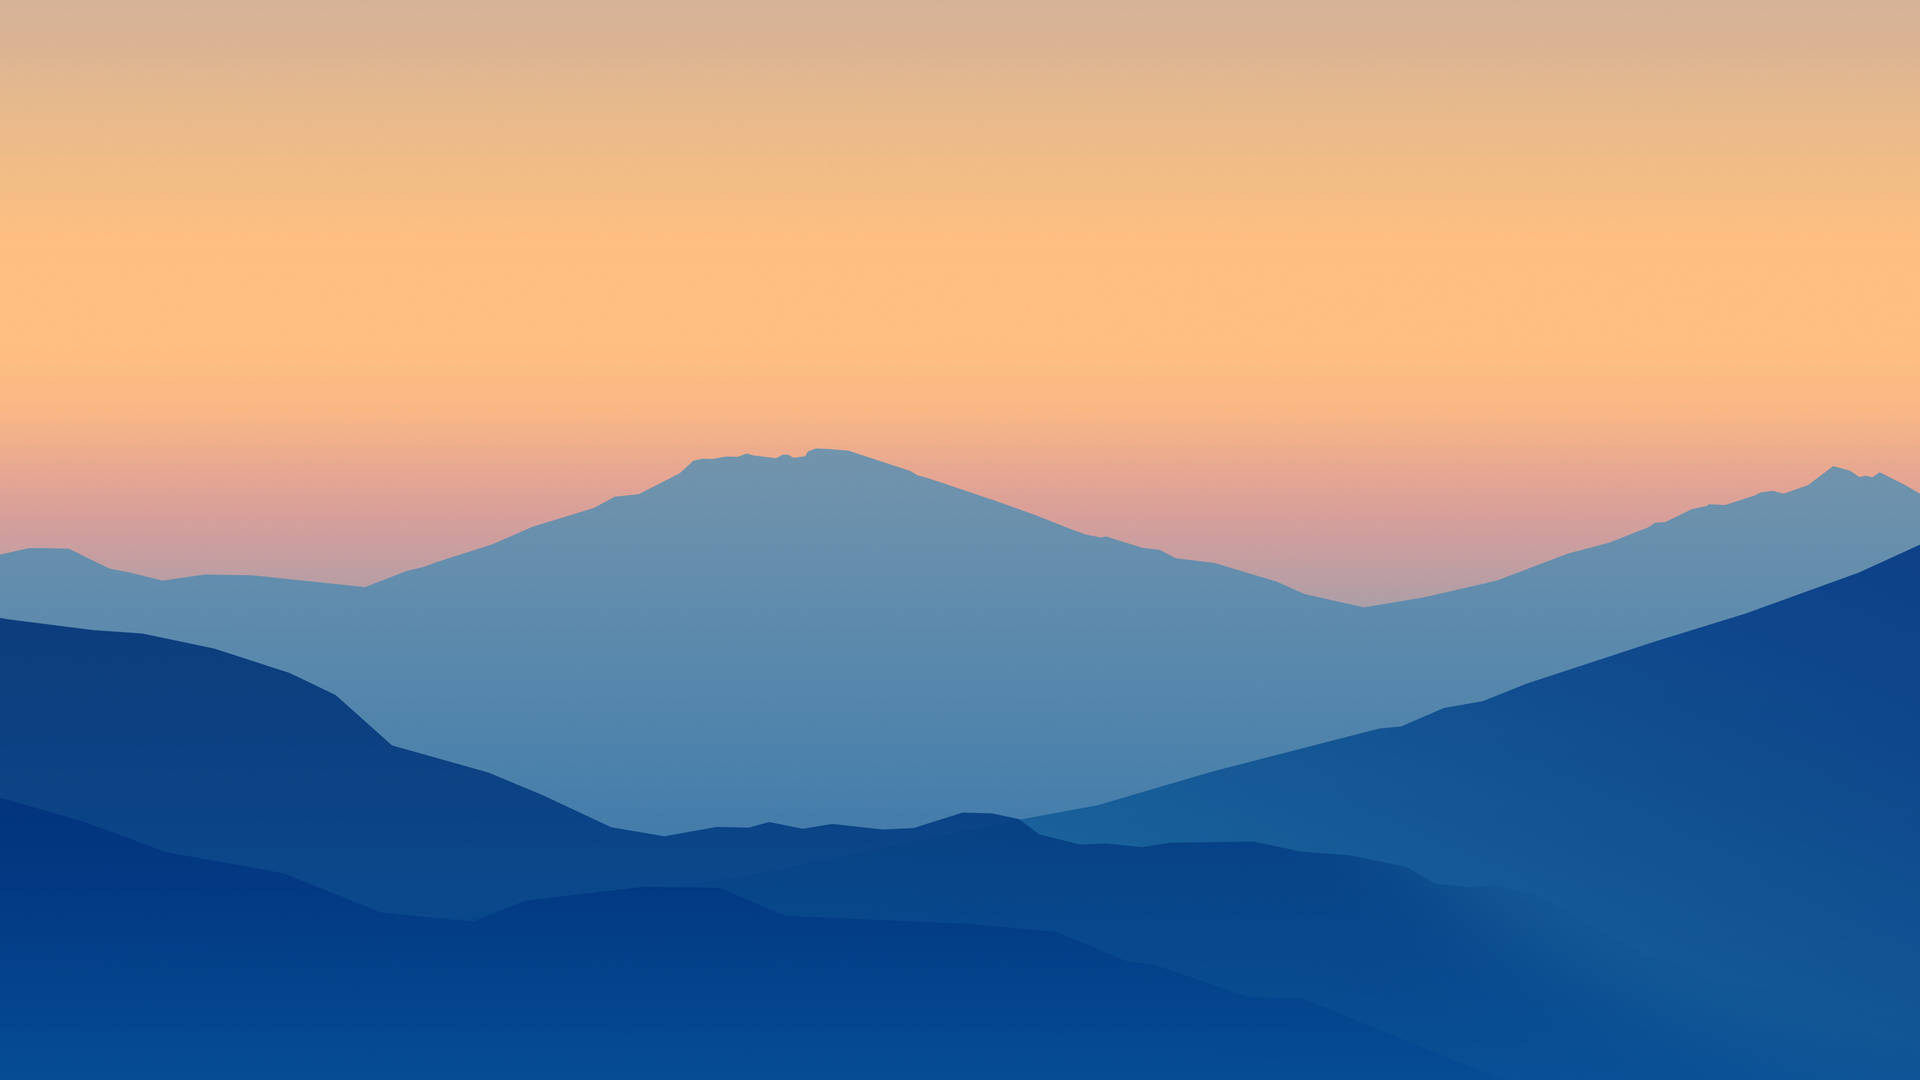 Plain Mountain Art Background